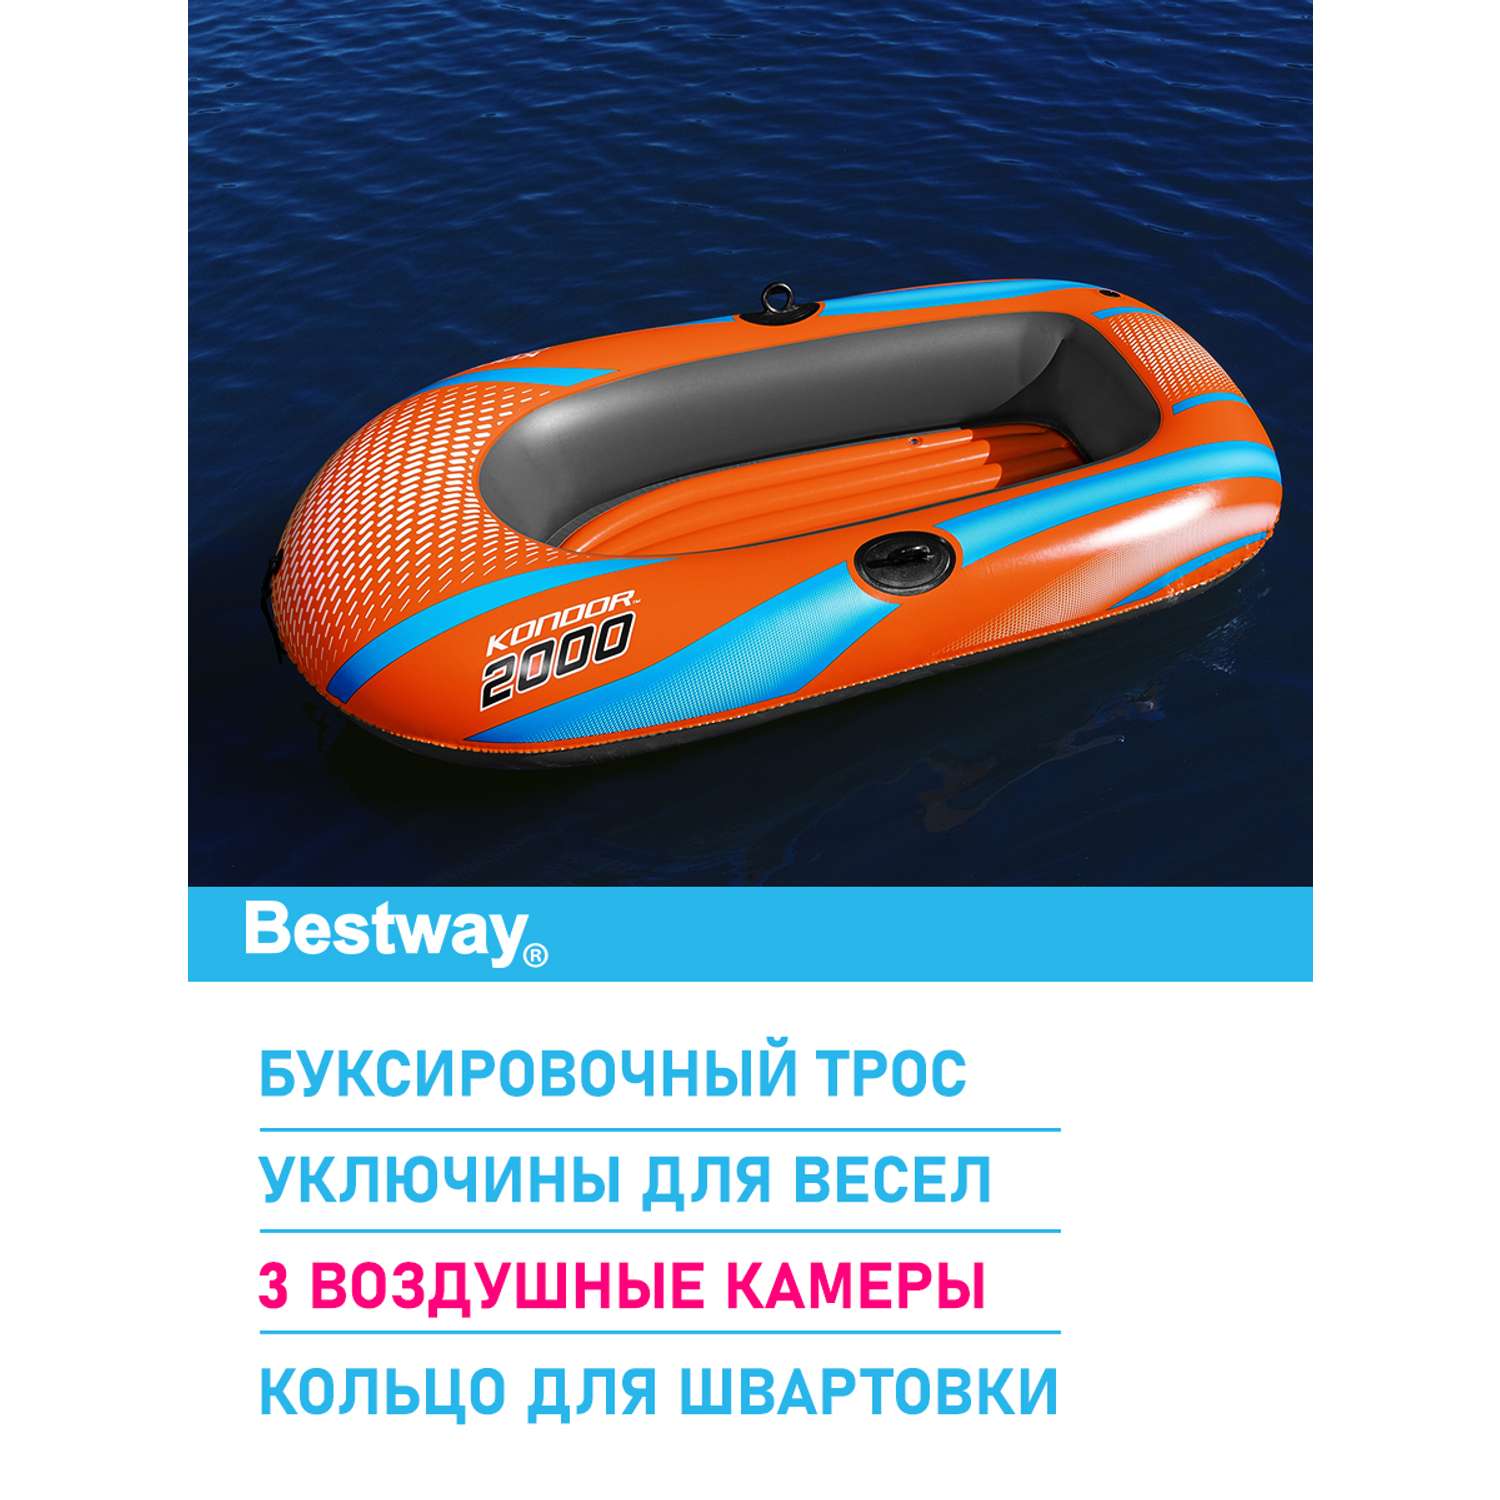 Лодка надувная Bestway Kondor 2000 без весел 185х97 см заплатка - фото 3